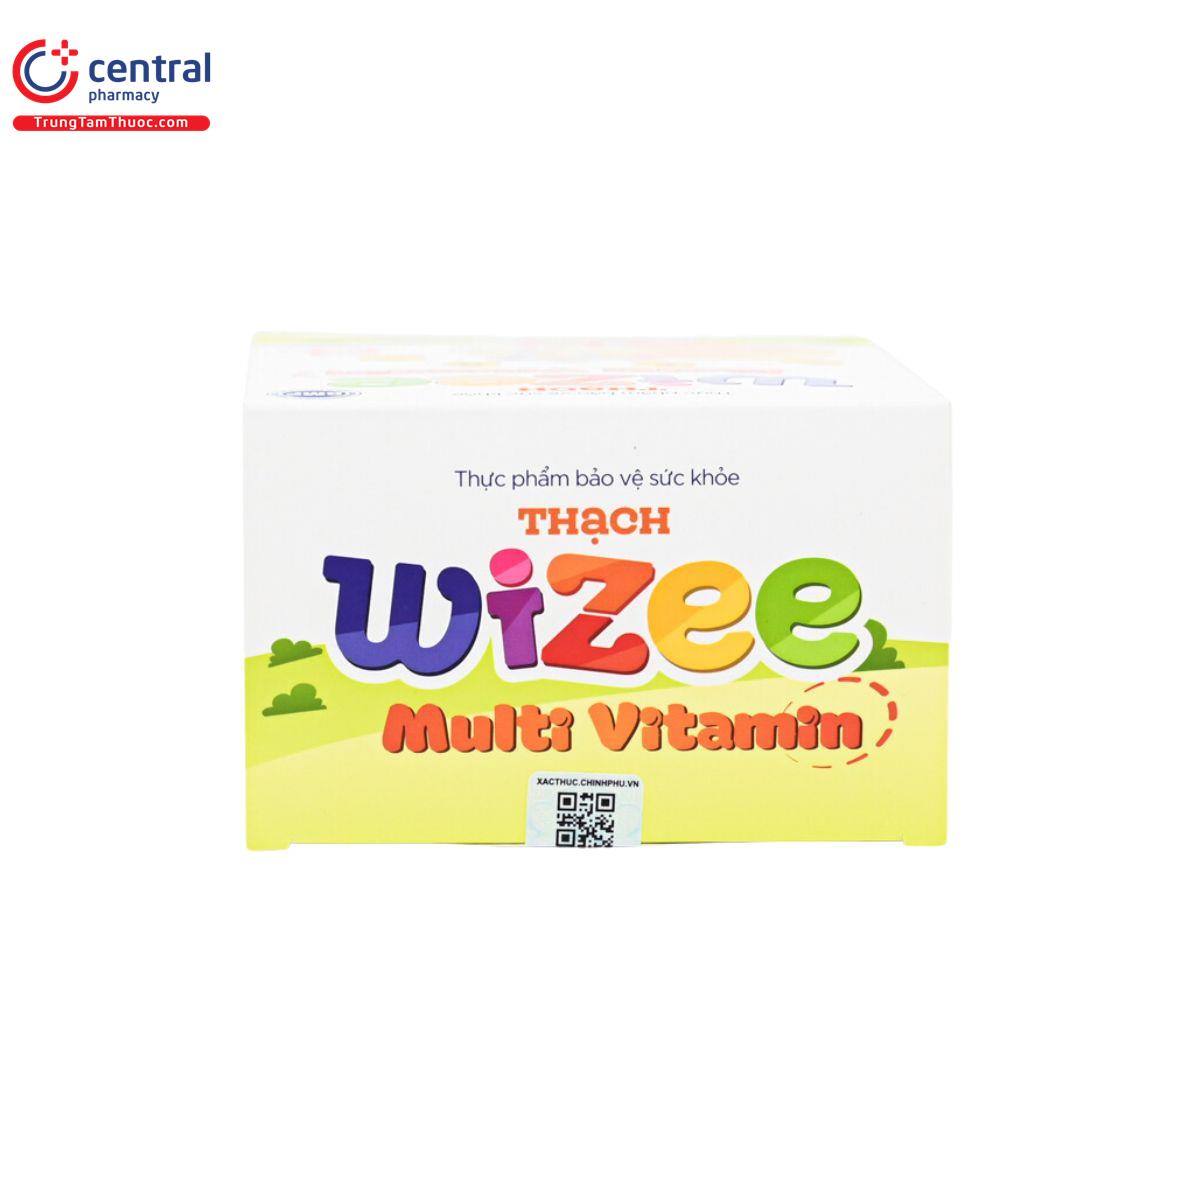 thach wizee multi vitamin 12 C1136